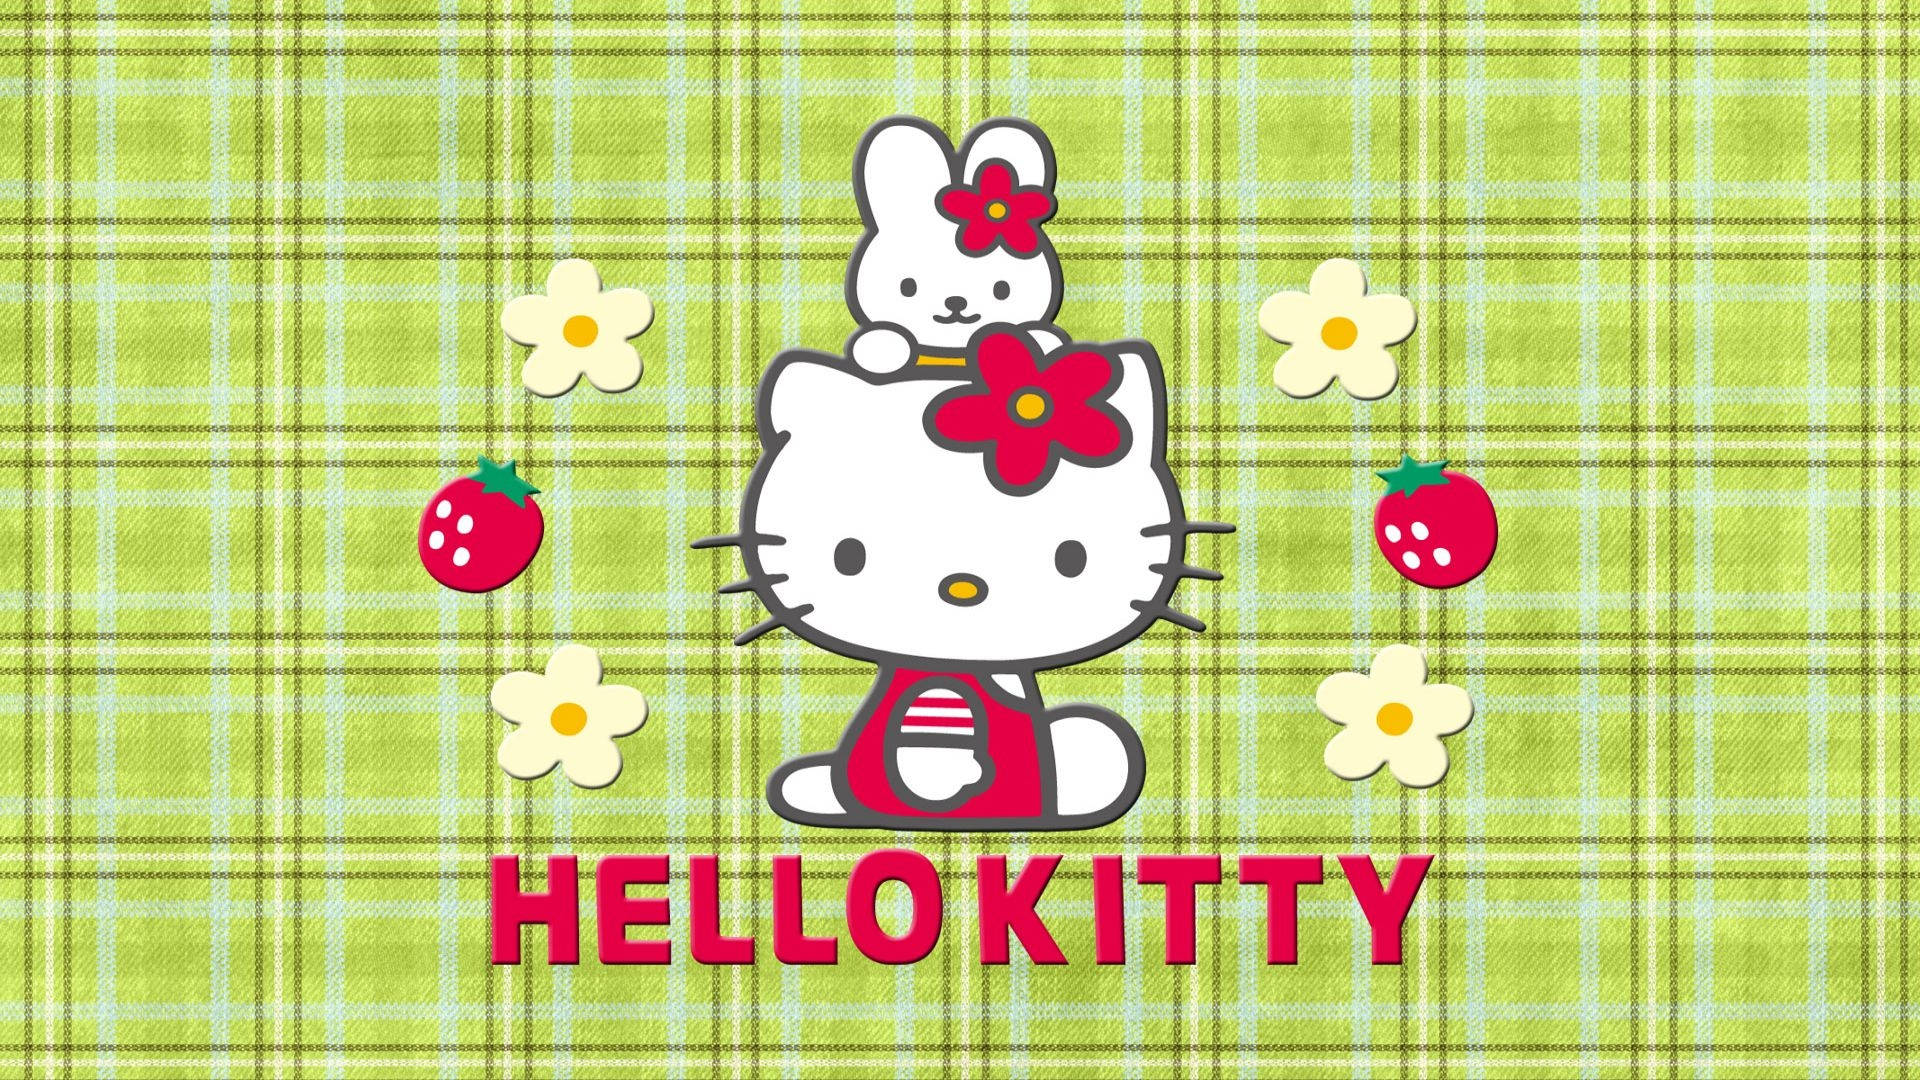 Kathy And Hello Kitty Aesthetic